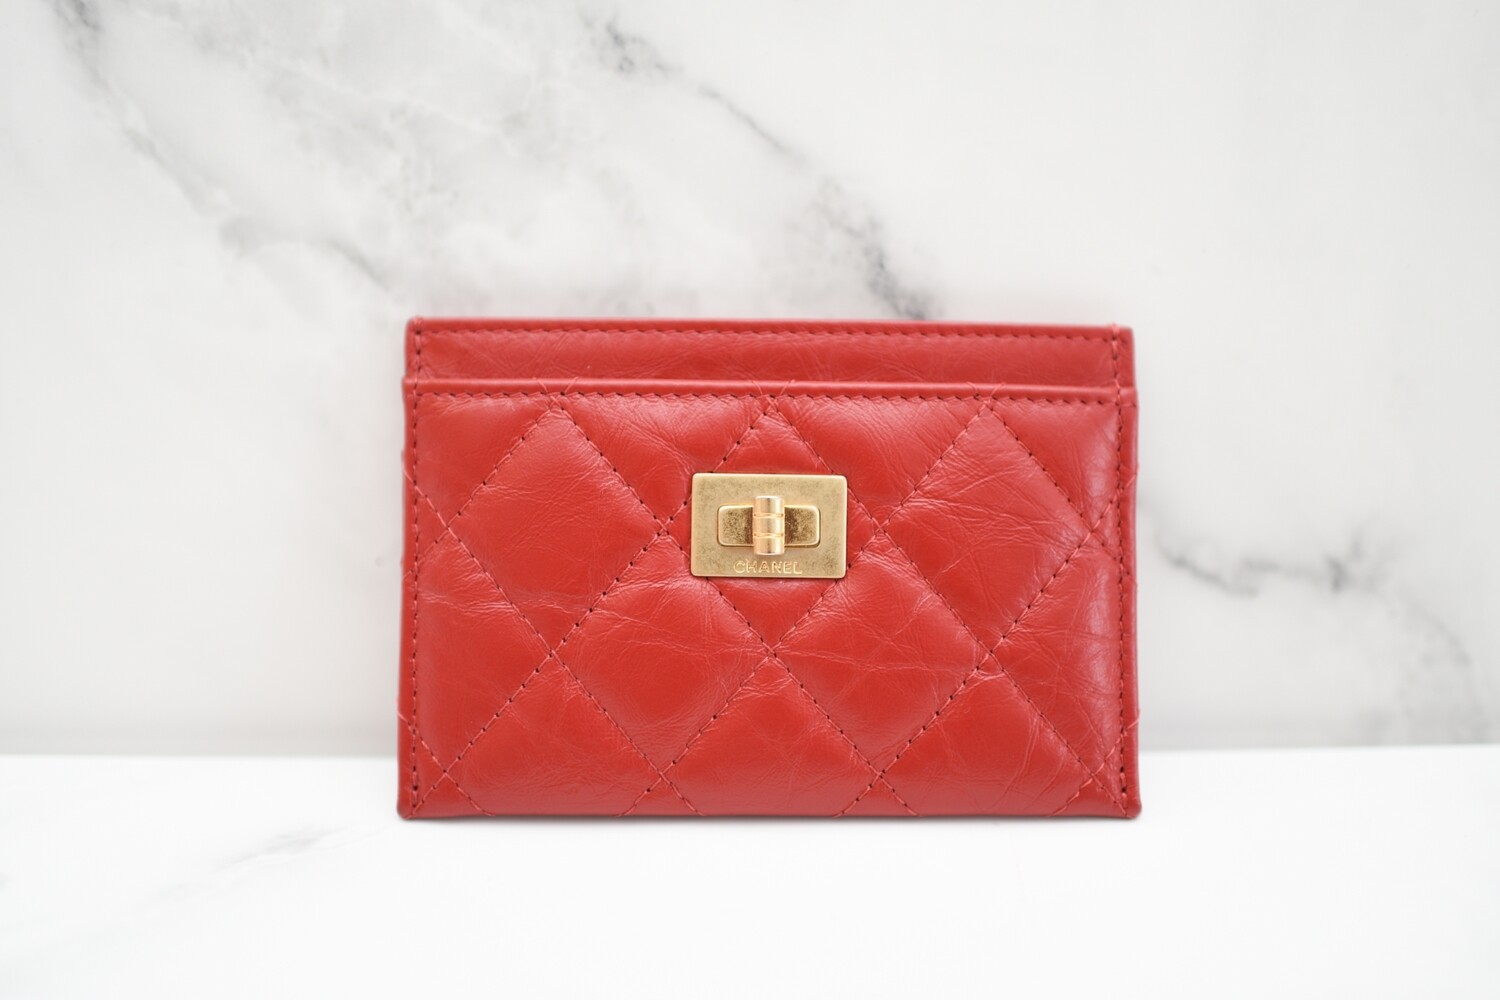 Chanel 2.55 Reissue SLG Flat Cardholder, Red Calfskin Leather, Gold Hardware, New in Box GA001